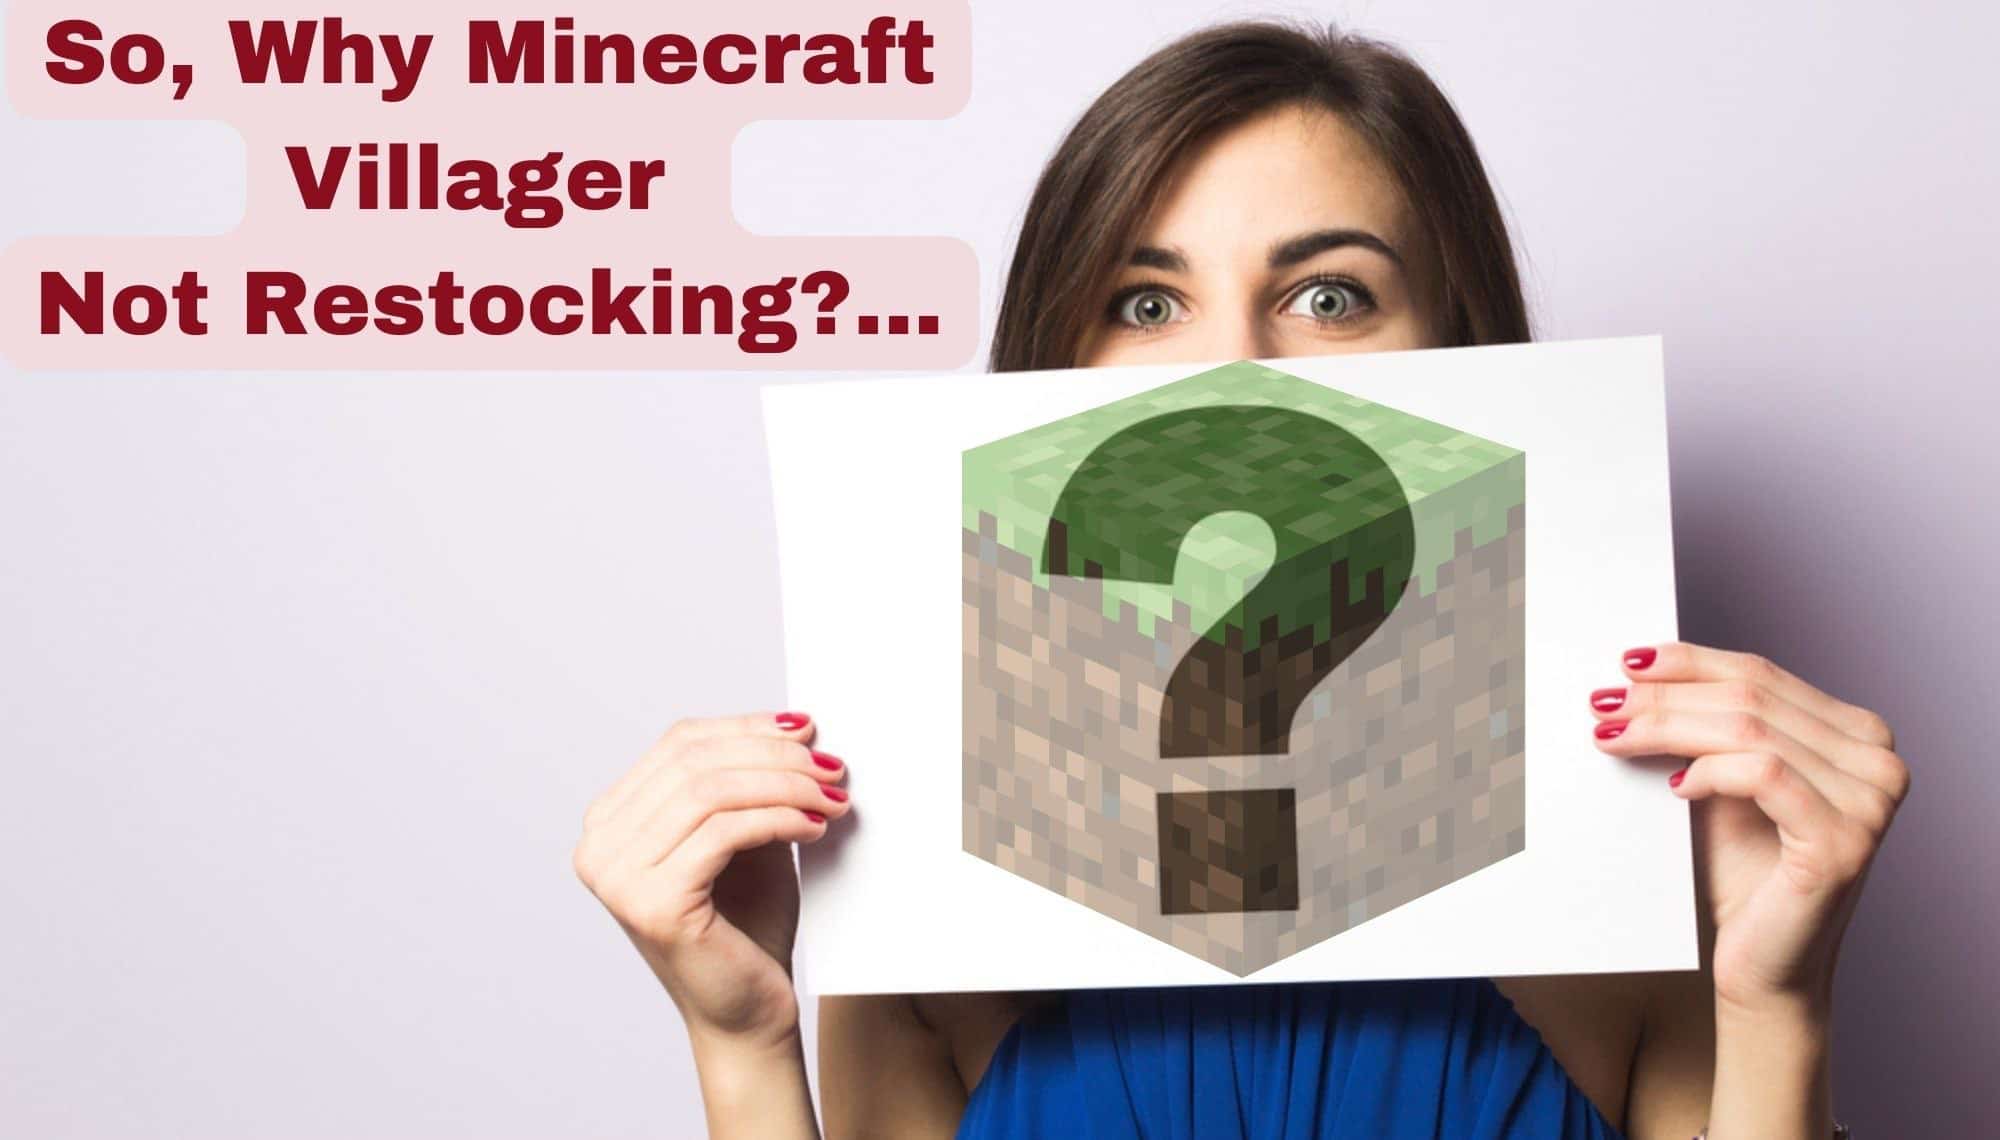 So Why Minecraft Villager Not Restocking